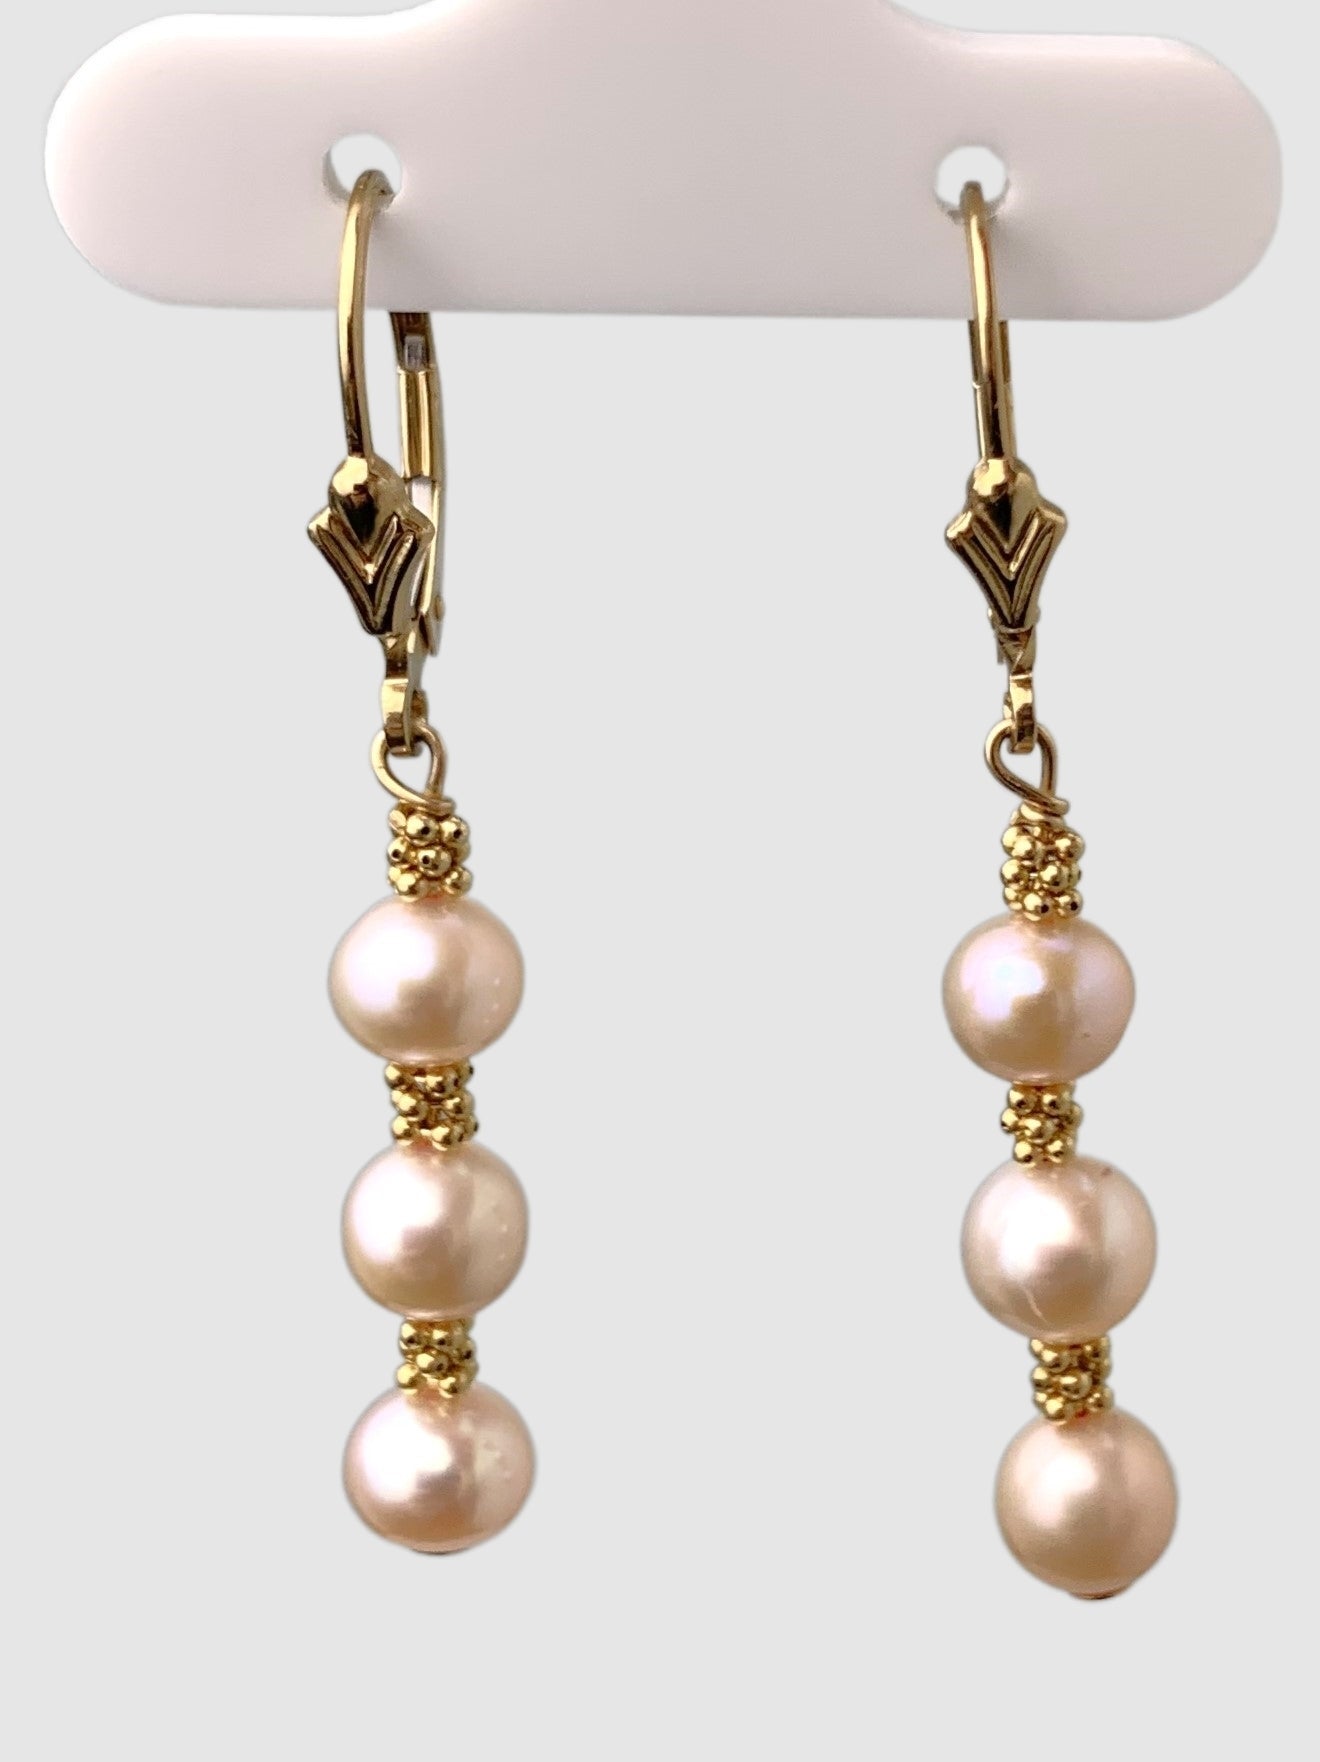 Pink Pearl and Rondelle Drop Earrings in 14KY - EAR-015-WIREPRL14Y-PK